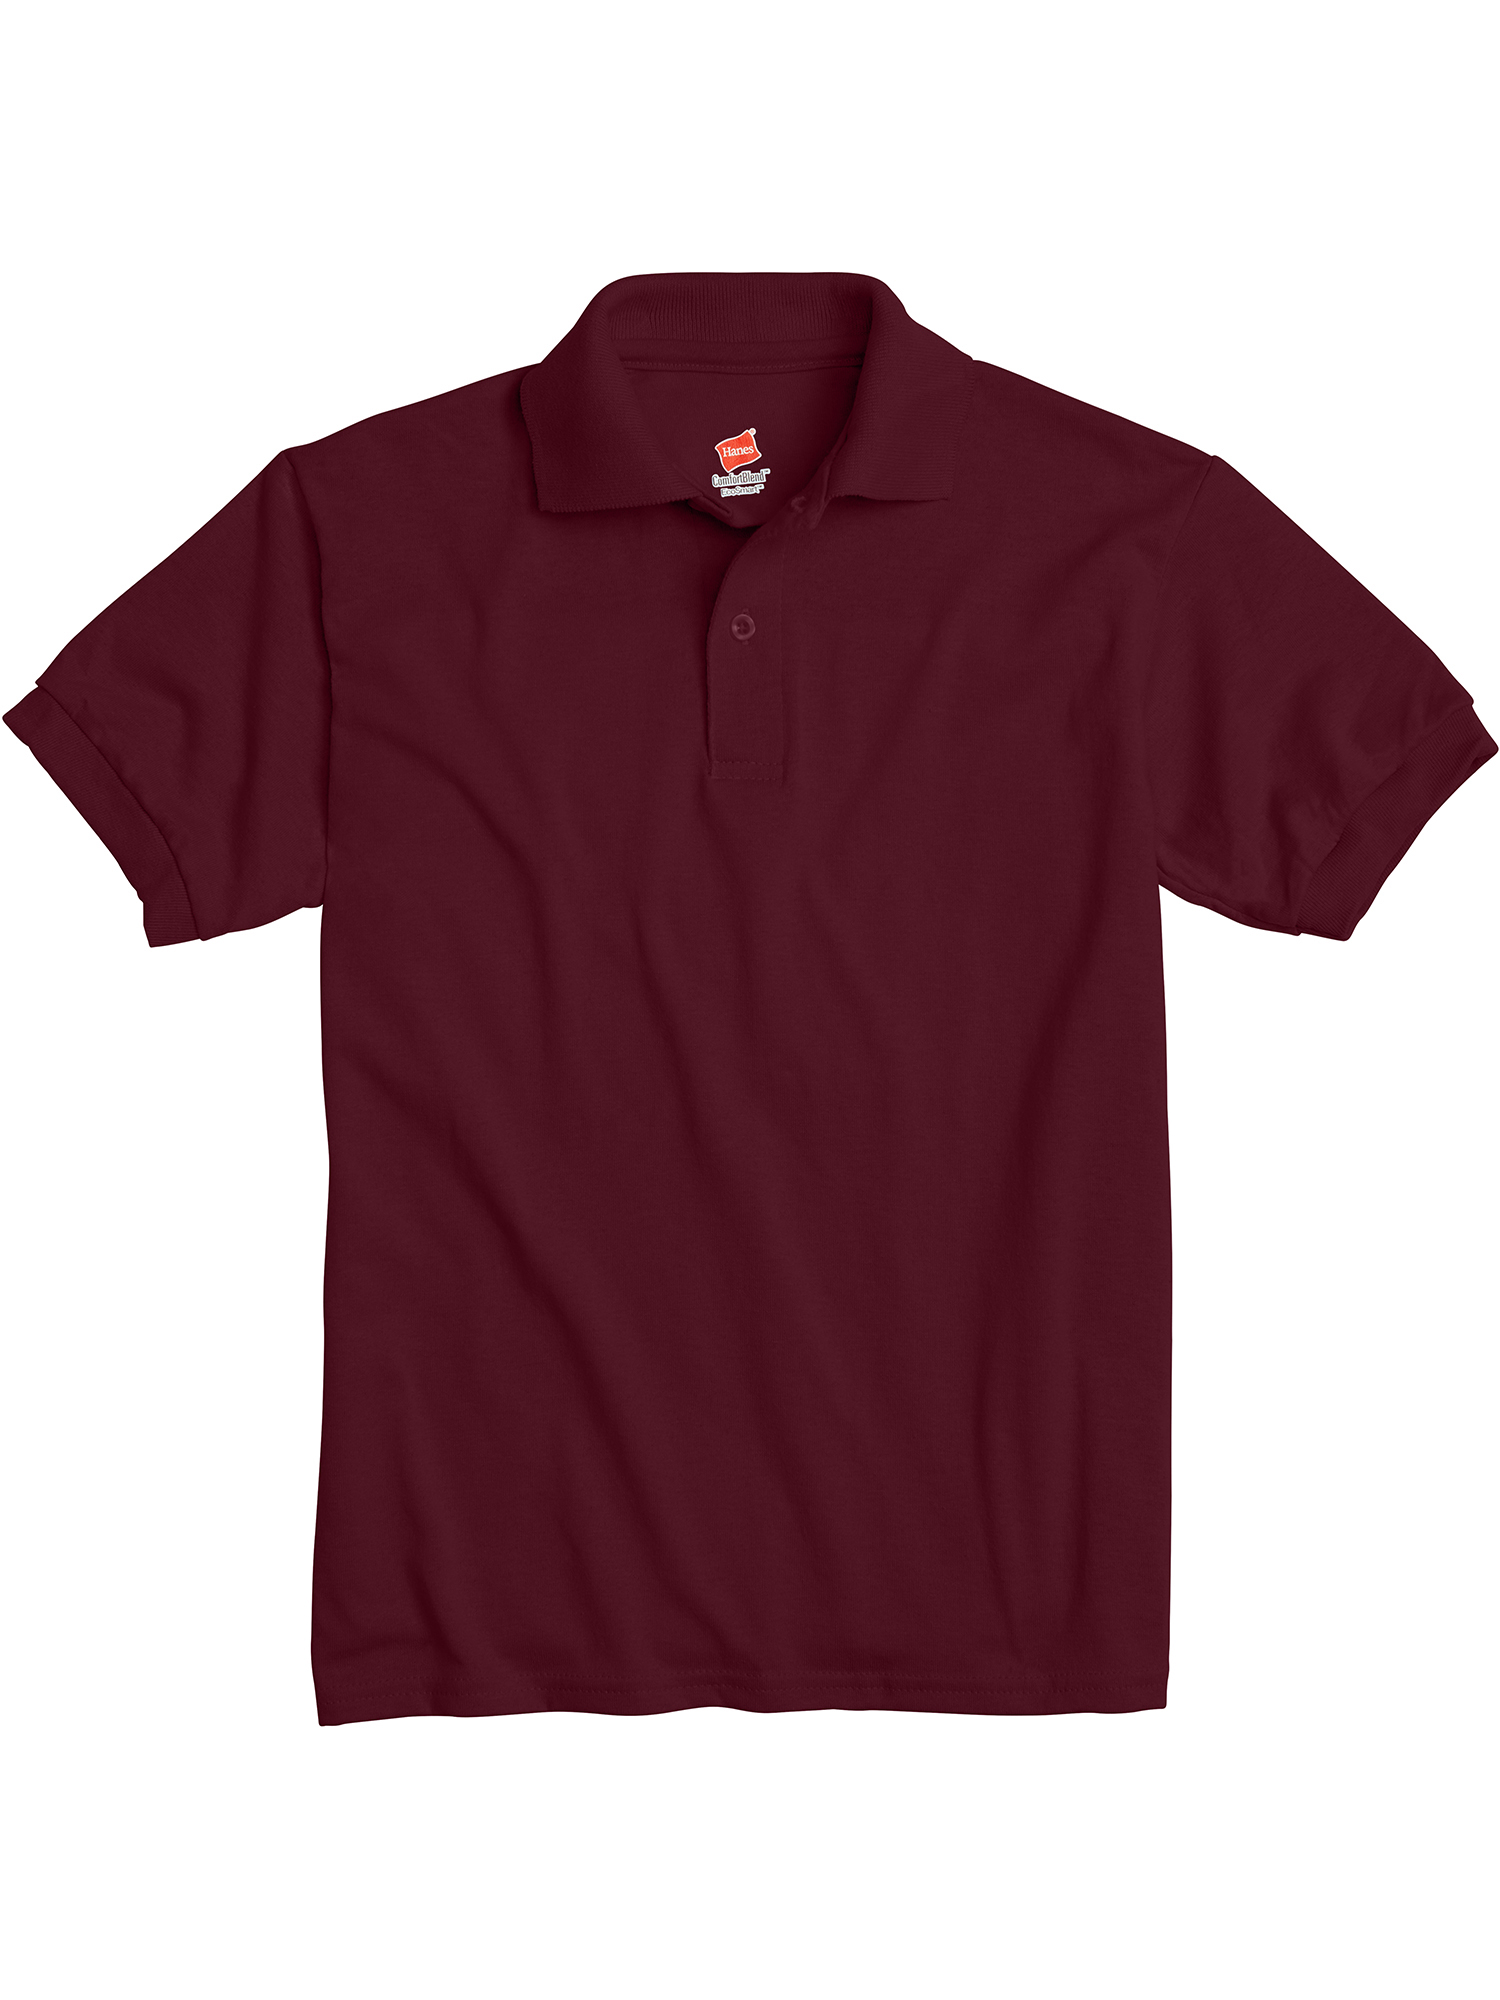 Hanes Boys School Uniform 4-18 EcoSmart Jersey Polo Shirt - image 1 of 5